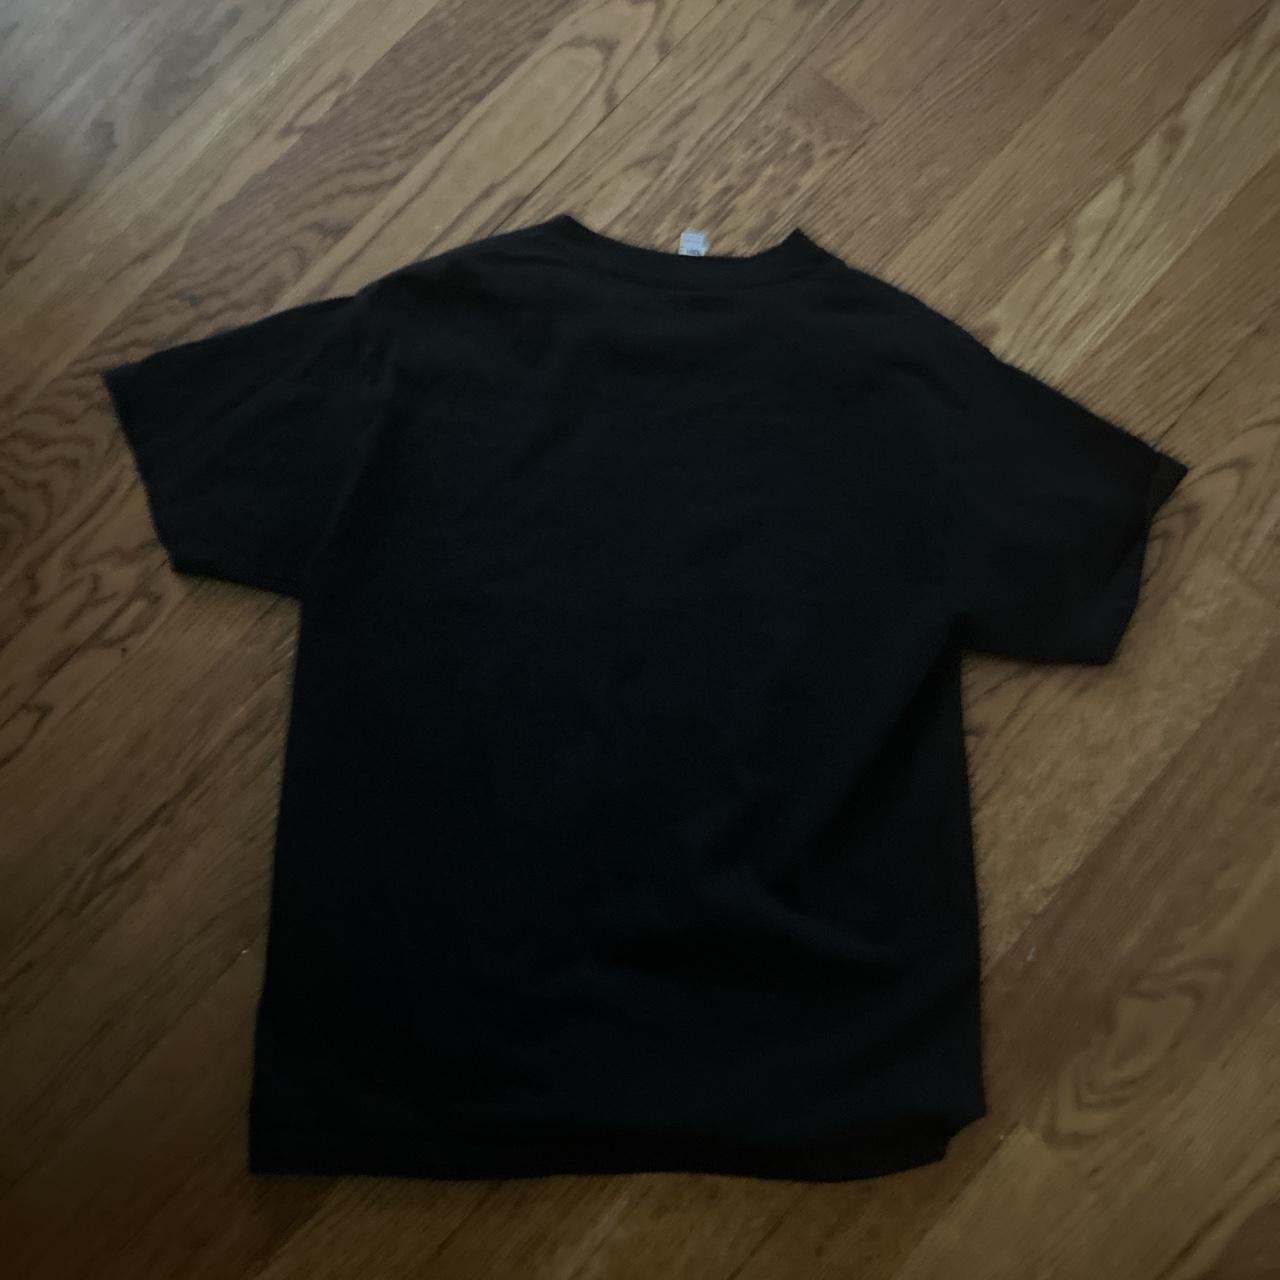 Lil Yachty - Wearicy.com shirt 100% cotton Black - Depop